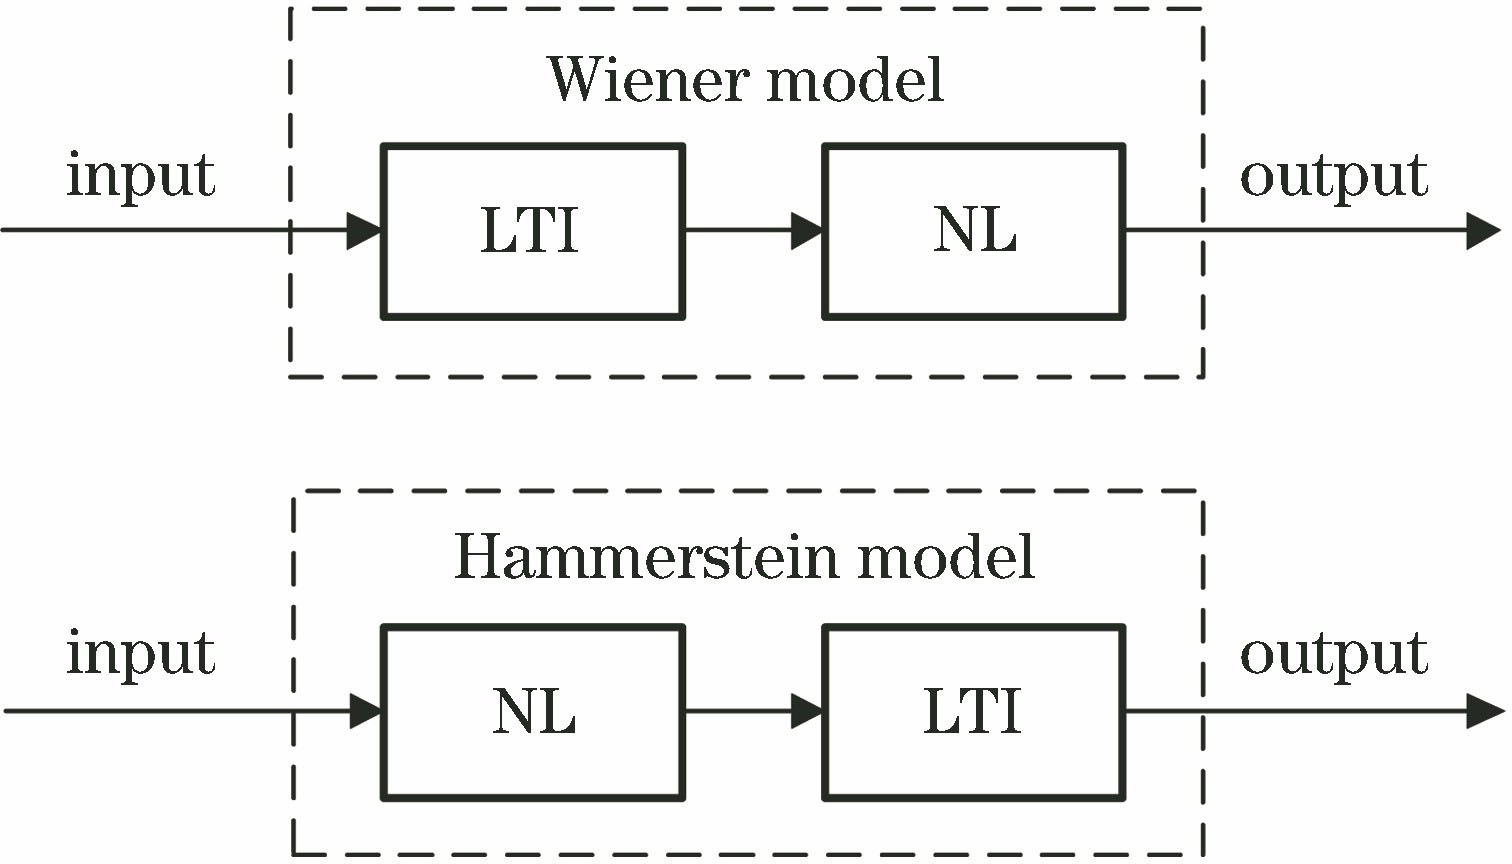 Block diagrams of Wiener model and Hammerstein model